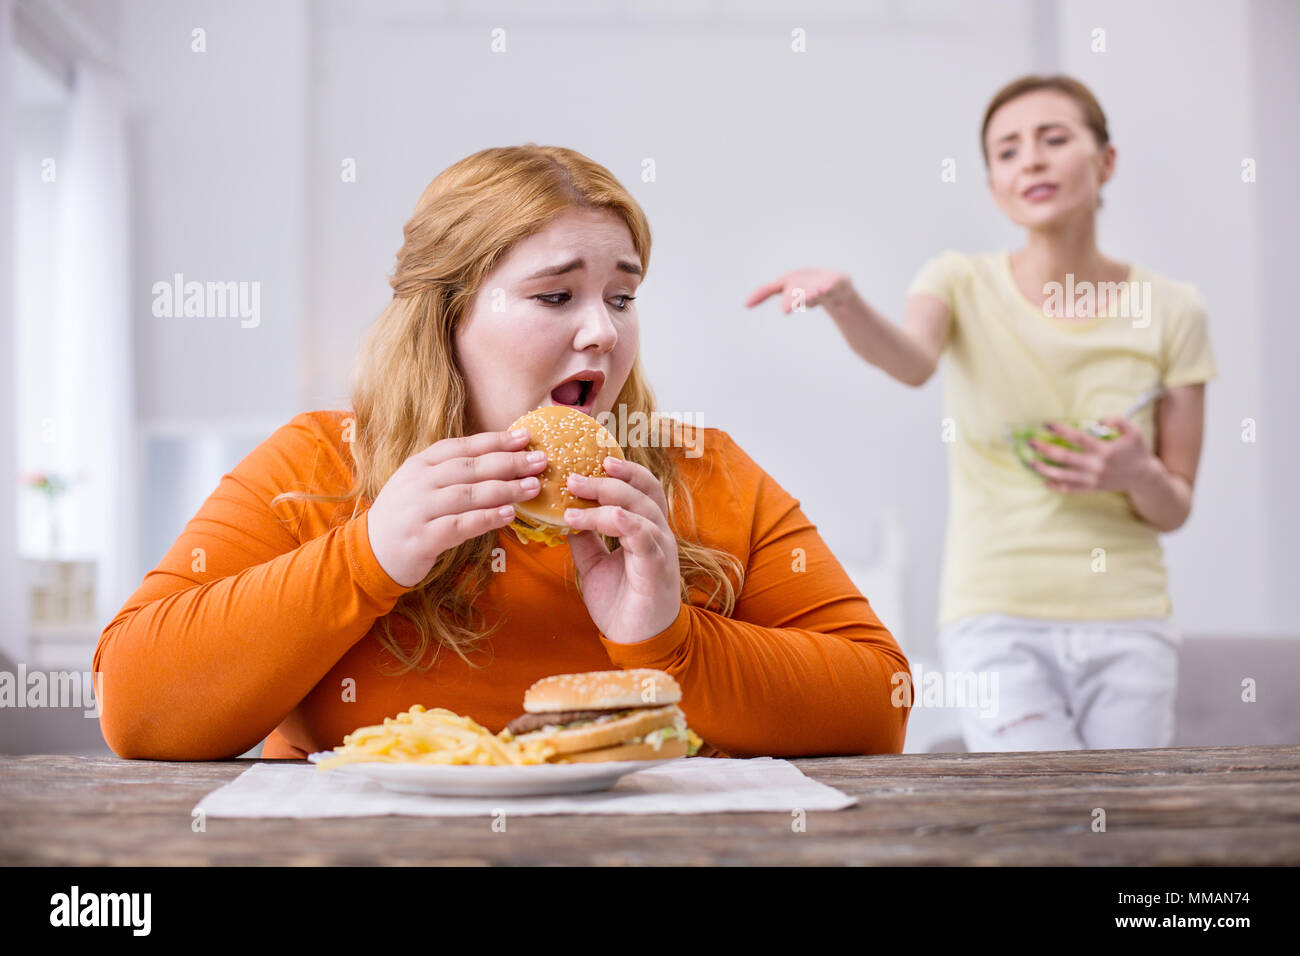 Miserable plump woman eating a sandwich Stock Photo